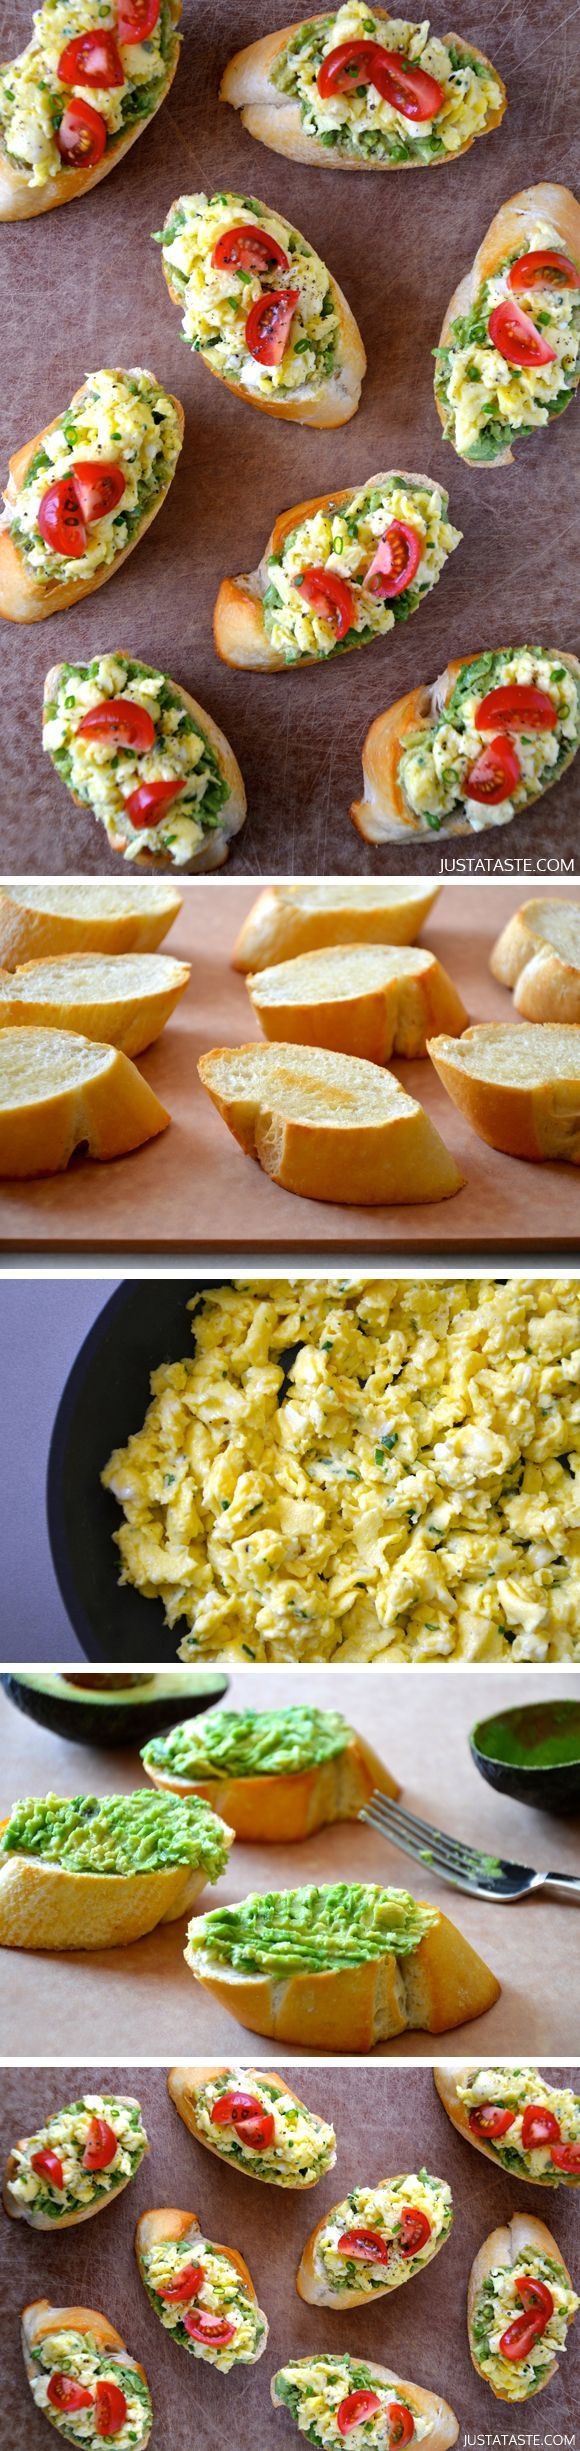 Birthday Breakfast Recipes
 Let s Do Brunch Party Food Ideas